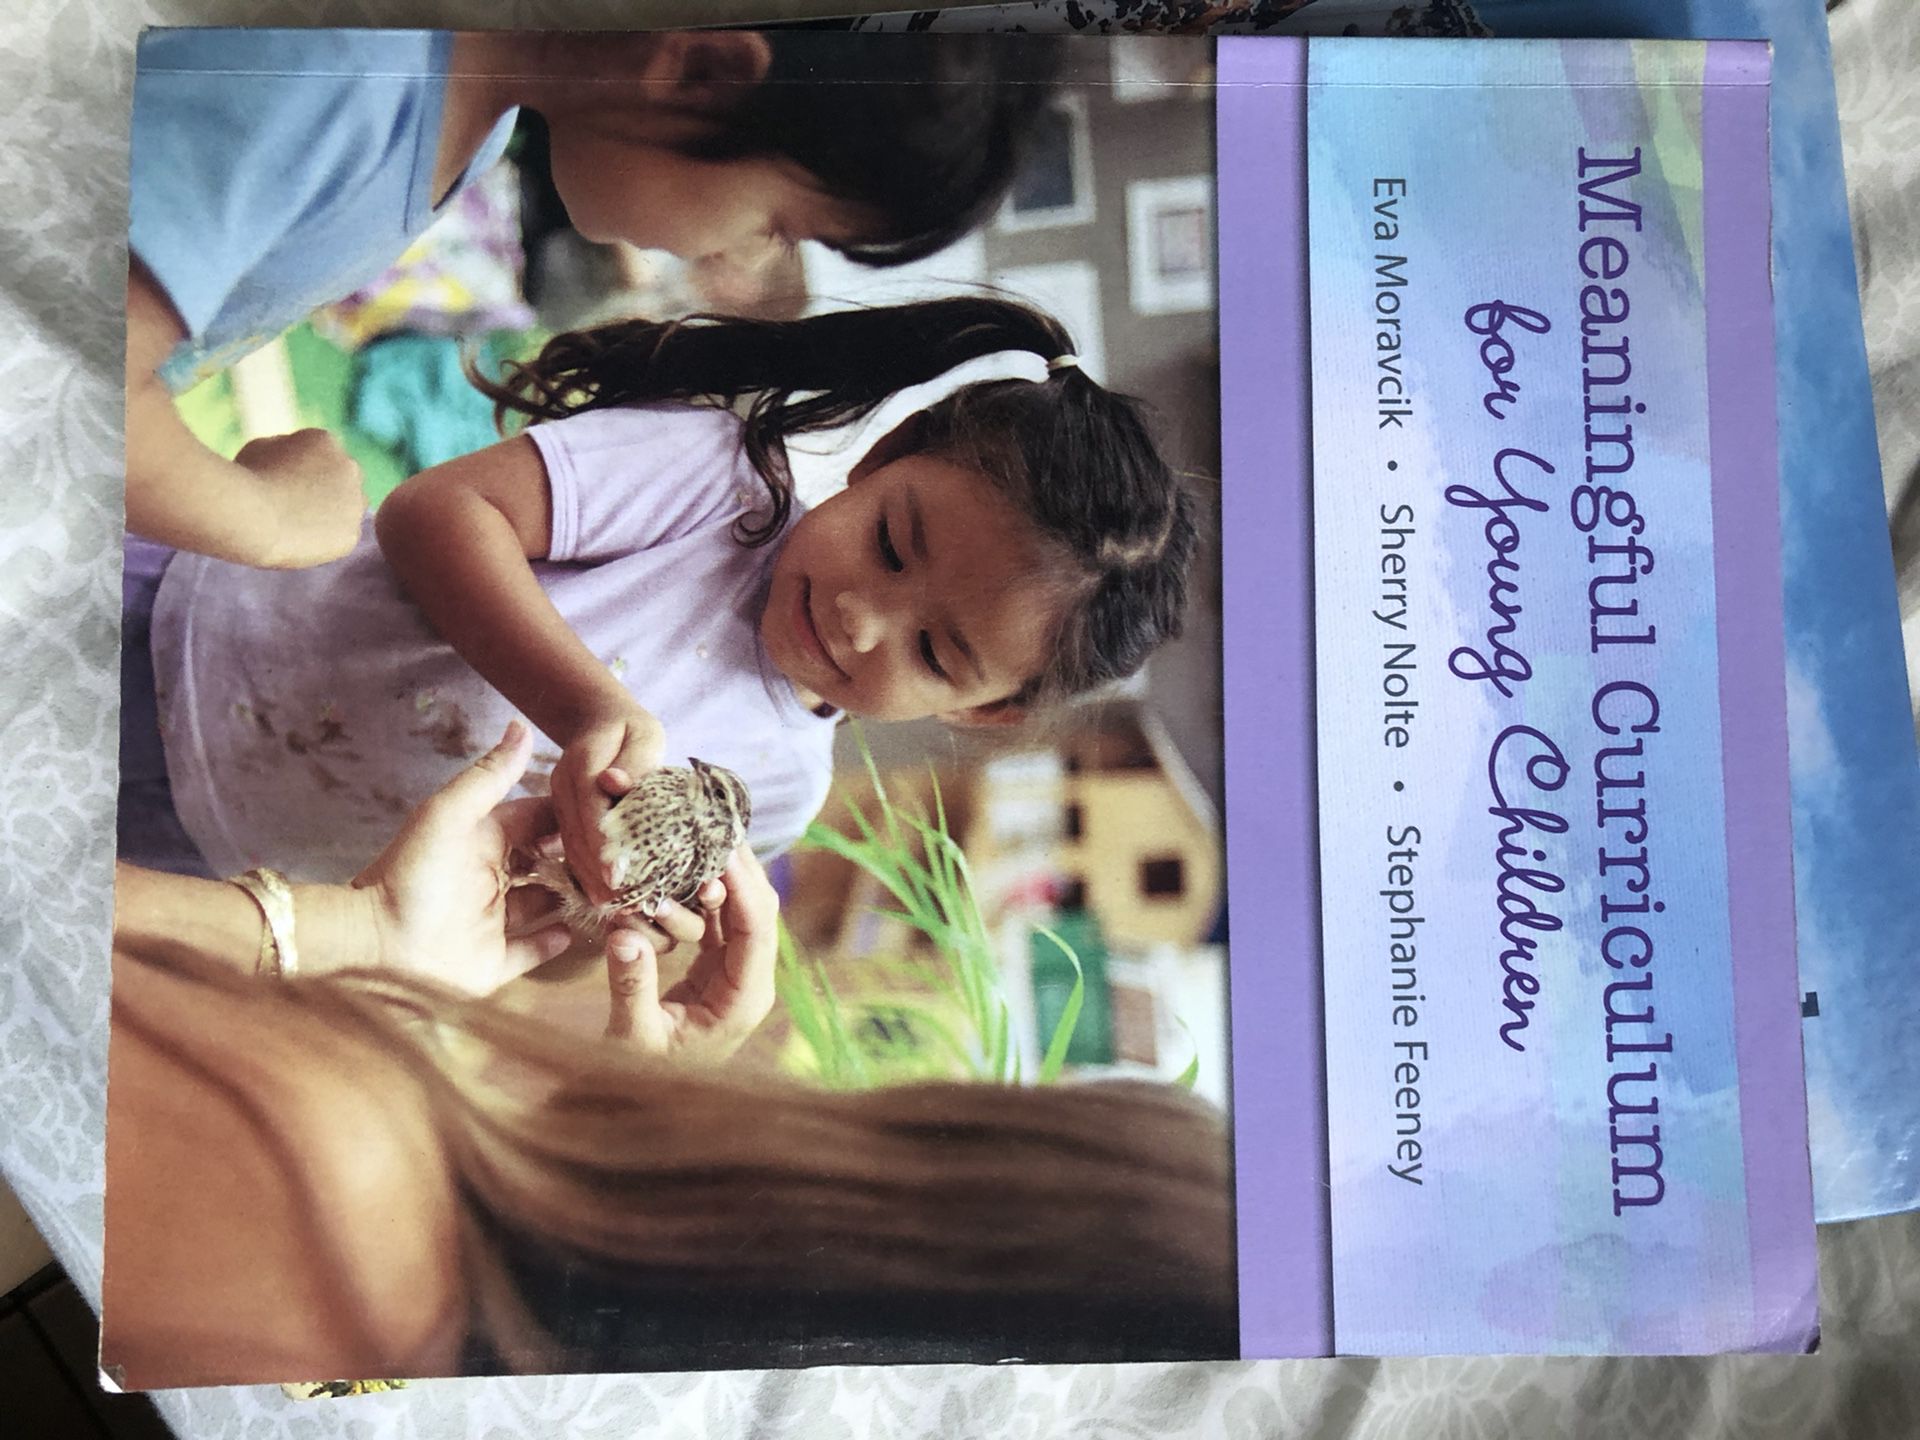 Child development text book